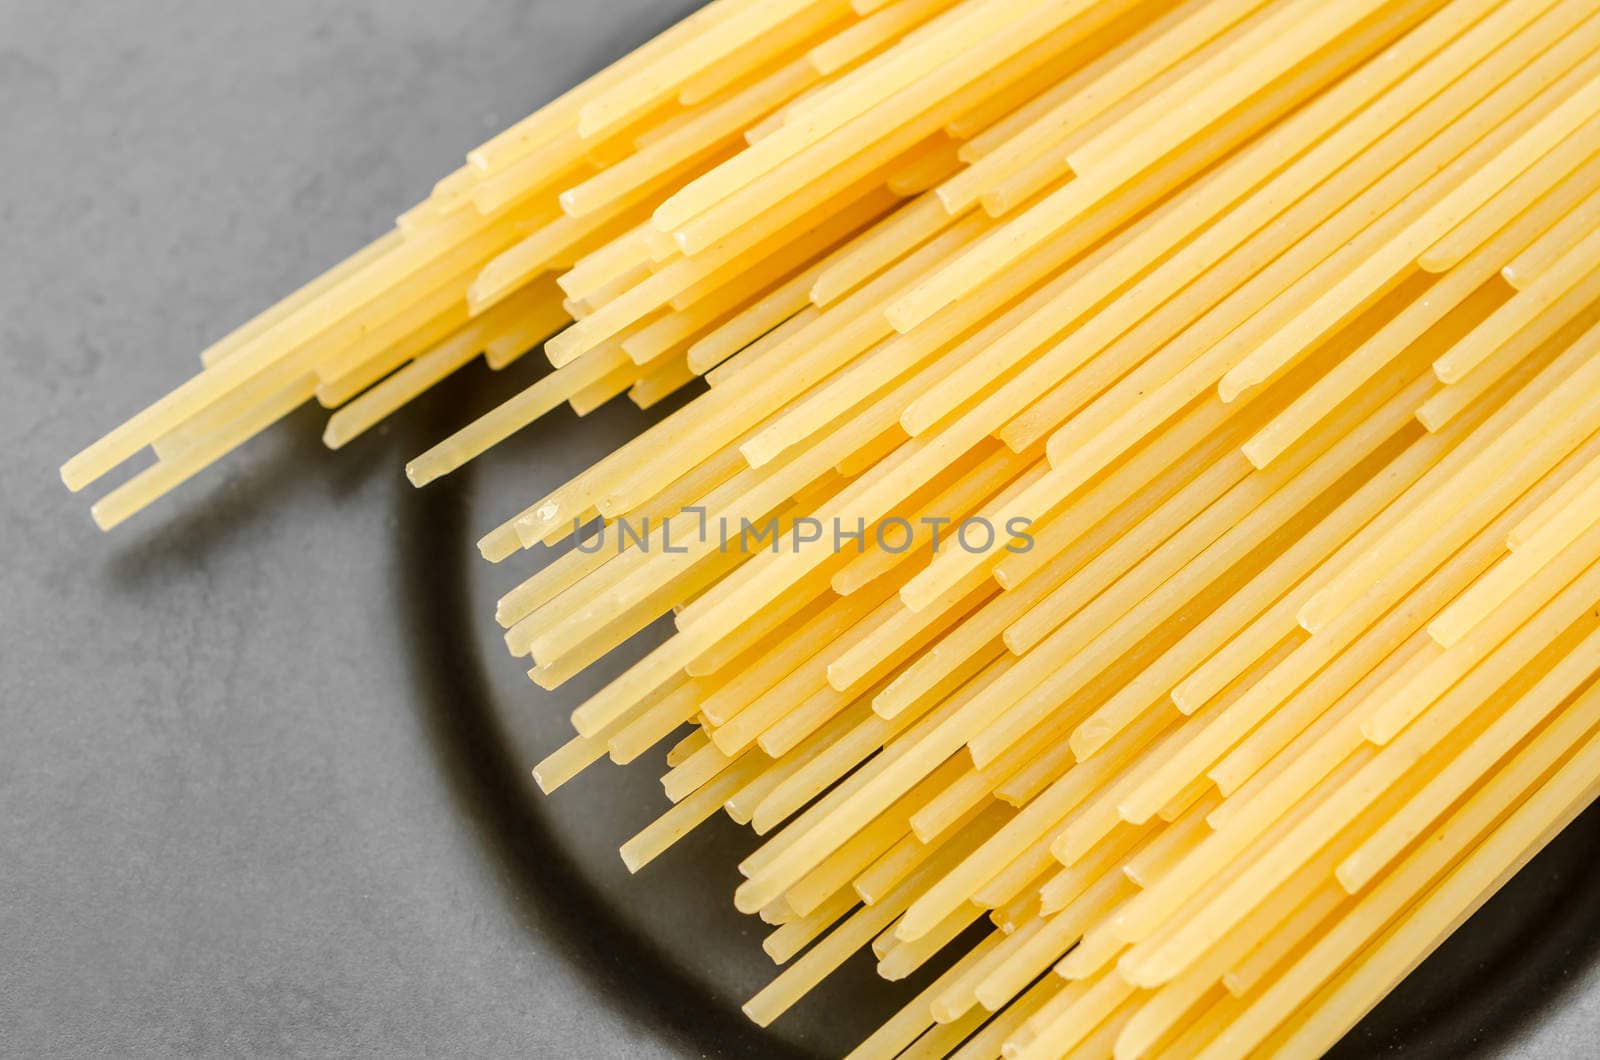 Uncooked pasta spaghetti macaroni on black dish background.